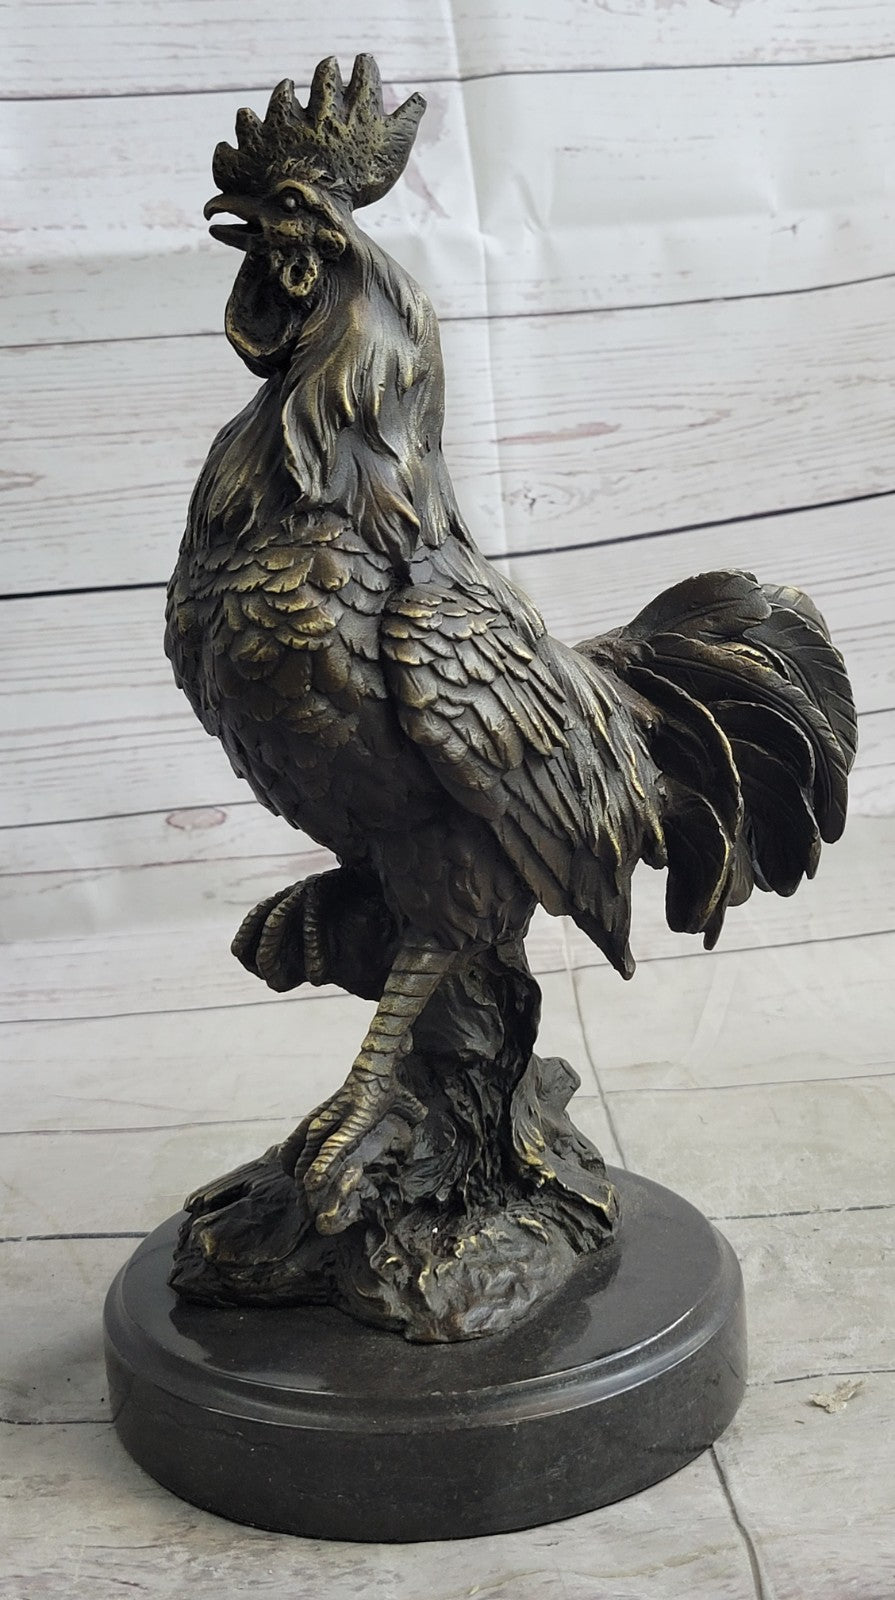 China FengShui Zodiac Bronze Rooster Yuanbao Ingot Statue Blessing Wealth 12"